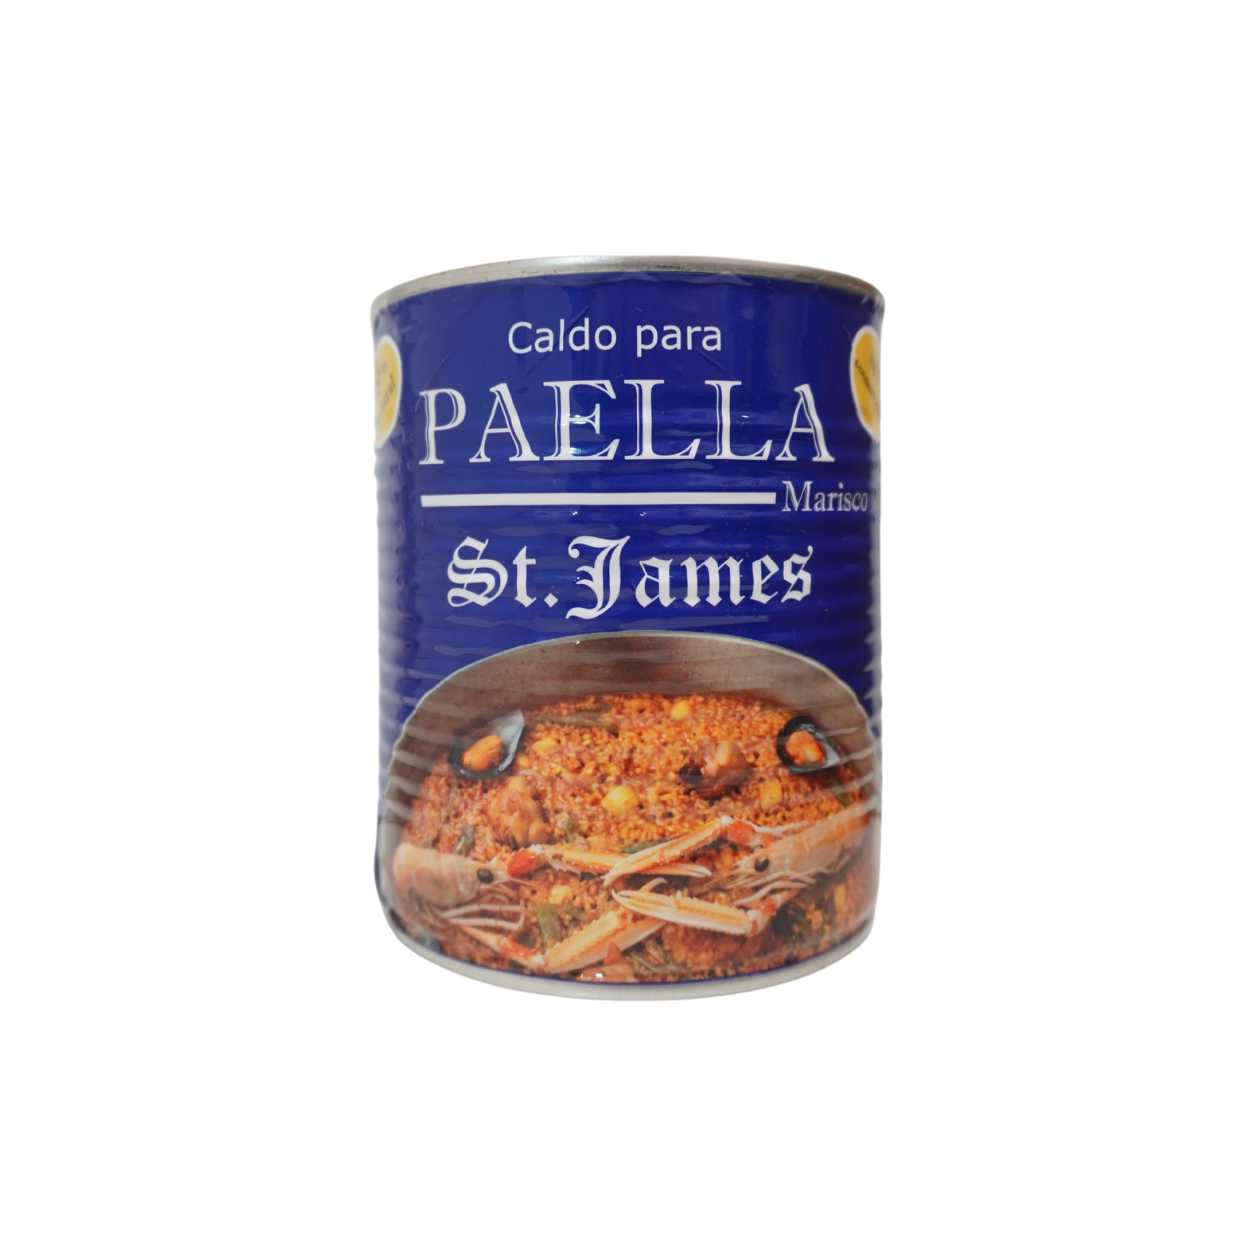 Caldo para Paella ST James de Mariscos - Mantequerías Bravo